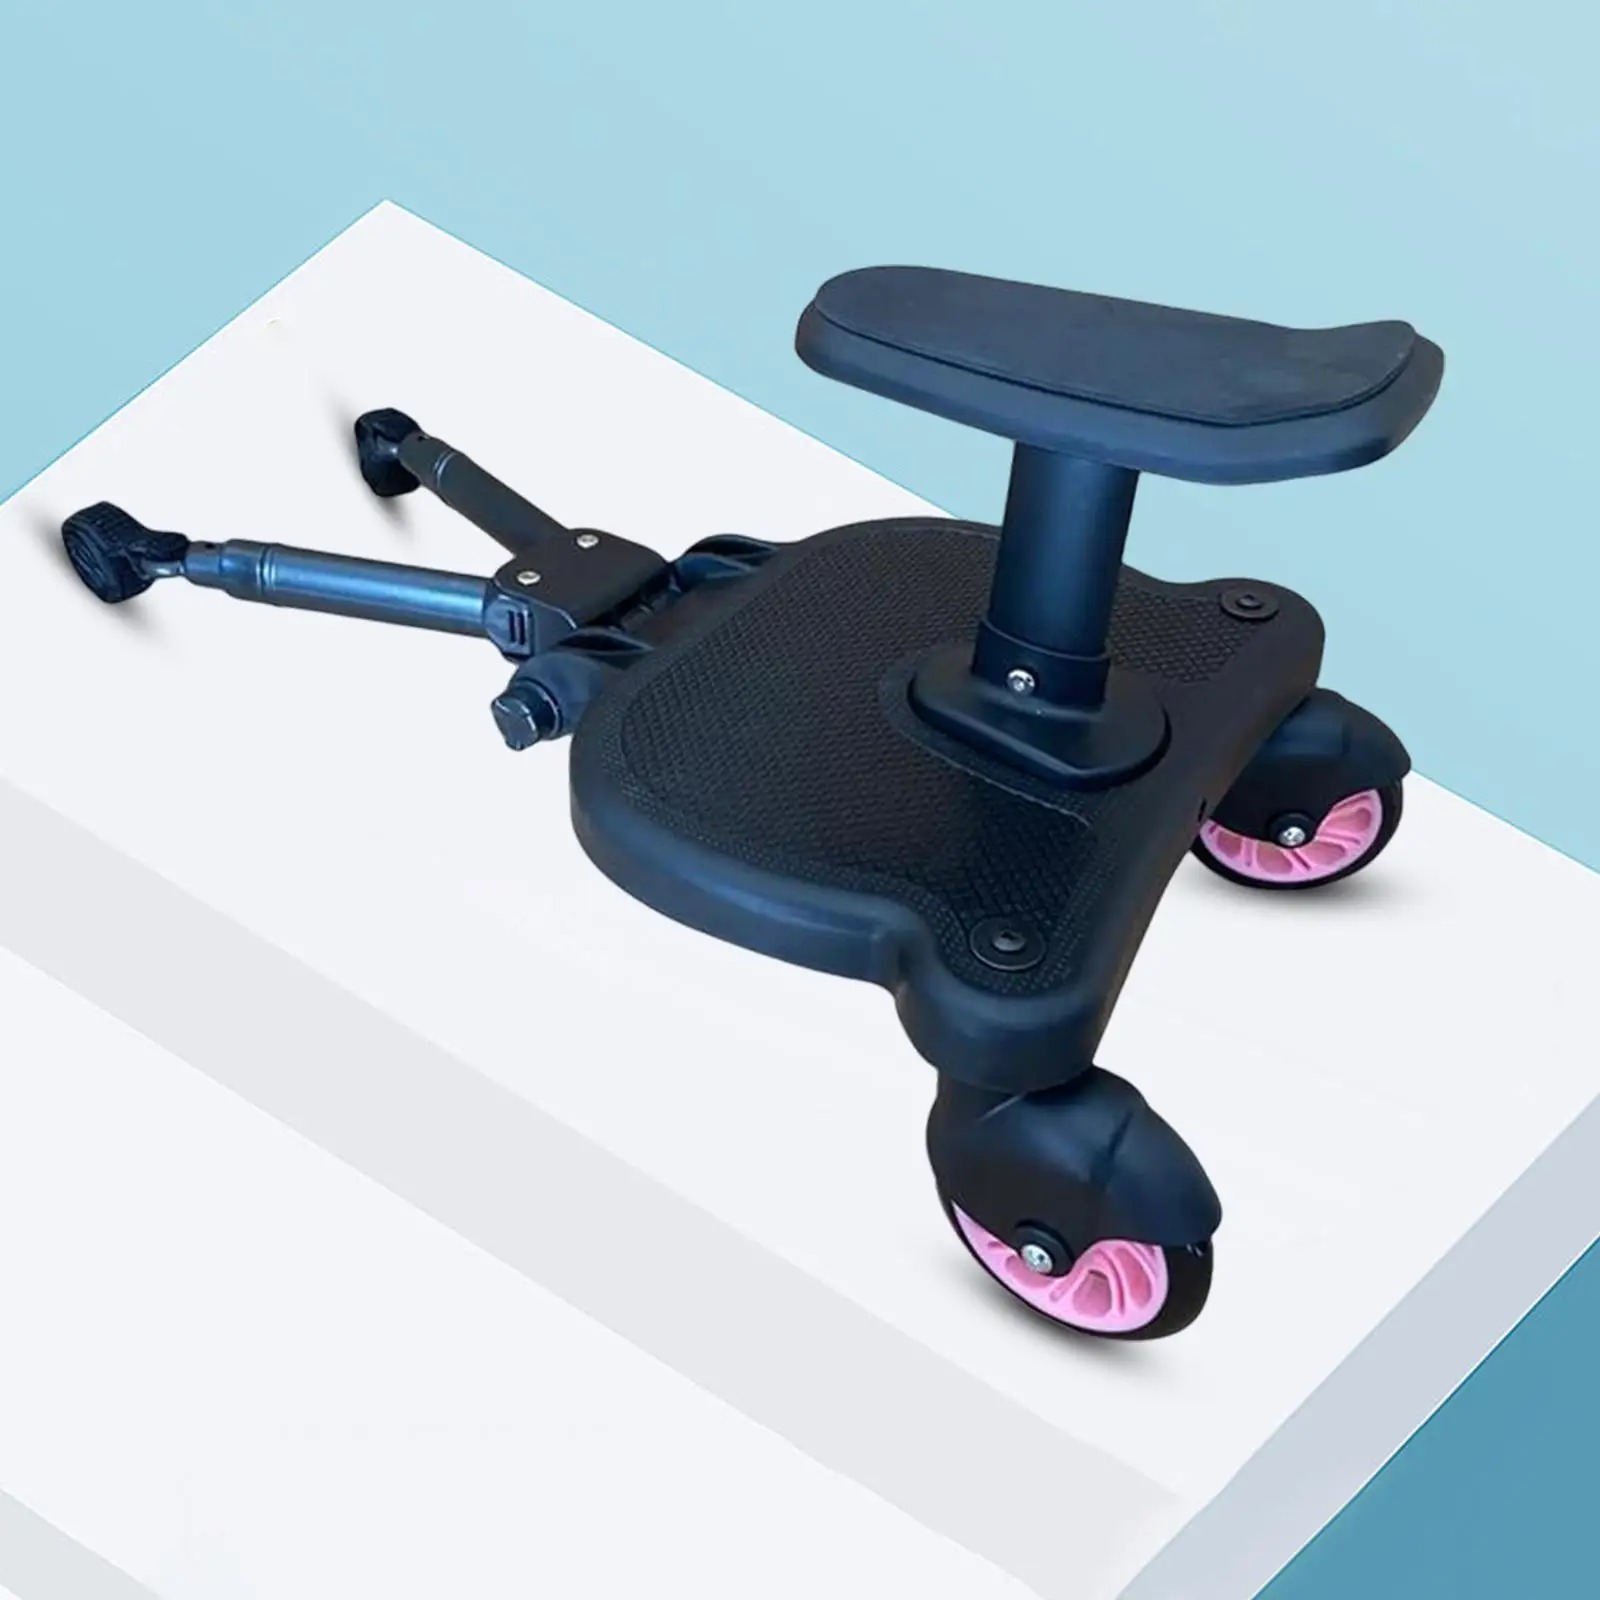 Pram Pedal Adapter Glider Board Stroller Glider Board for Most Brands of Strollers